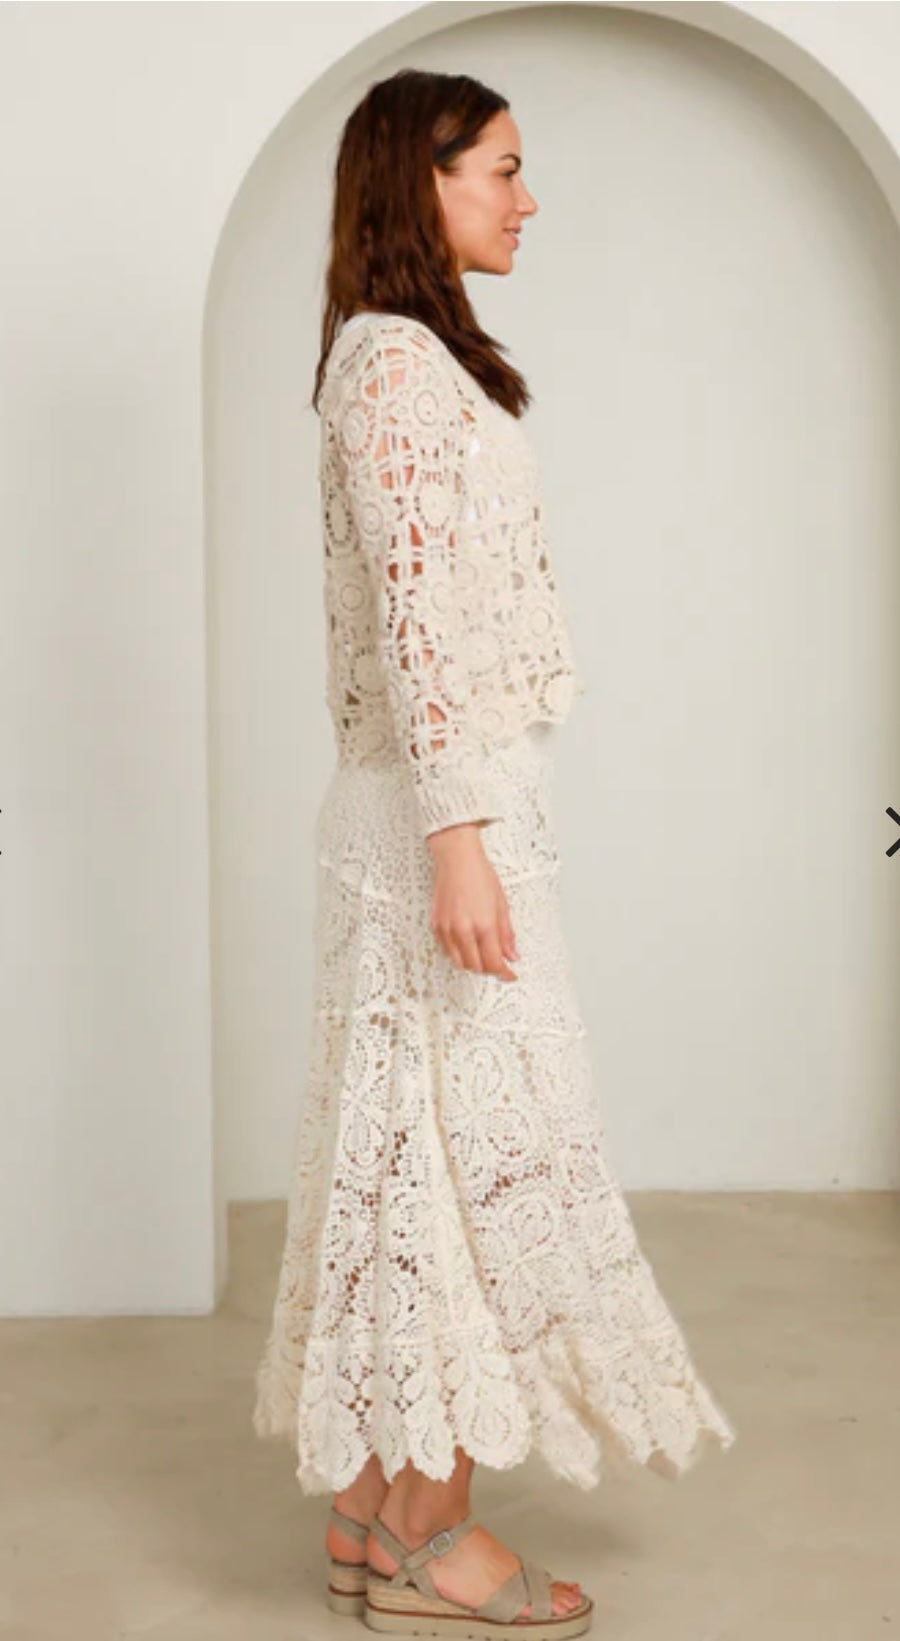 Crochet Cotton Lace Wedding /Occasion Long Skirt